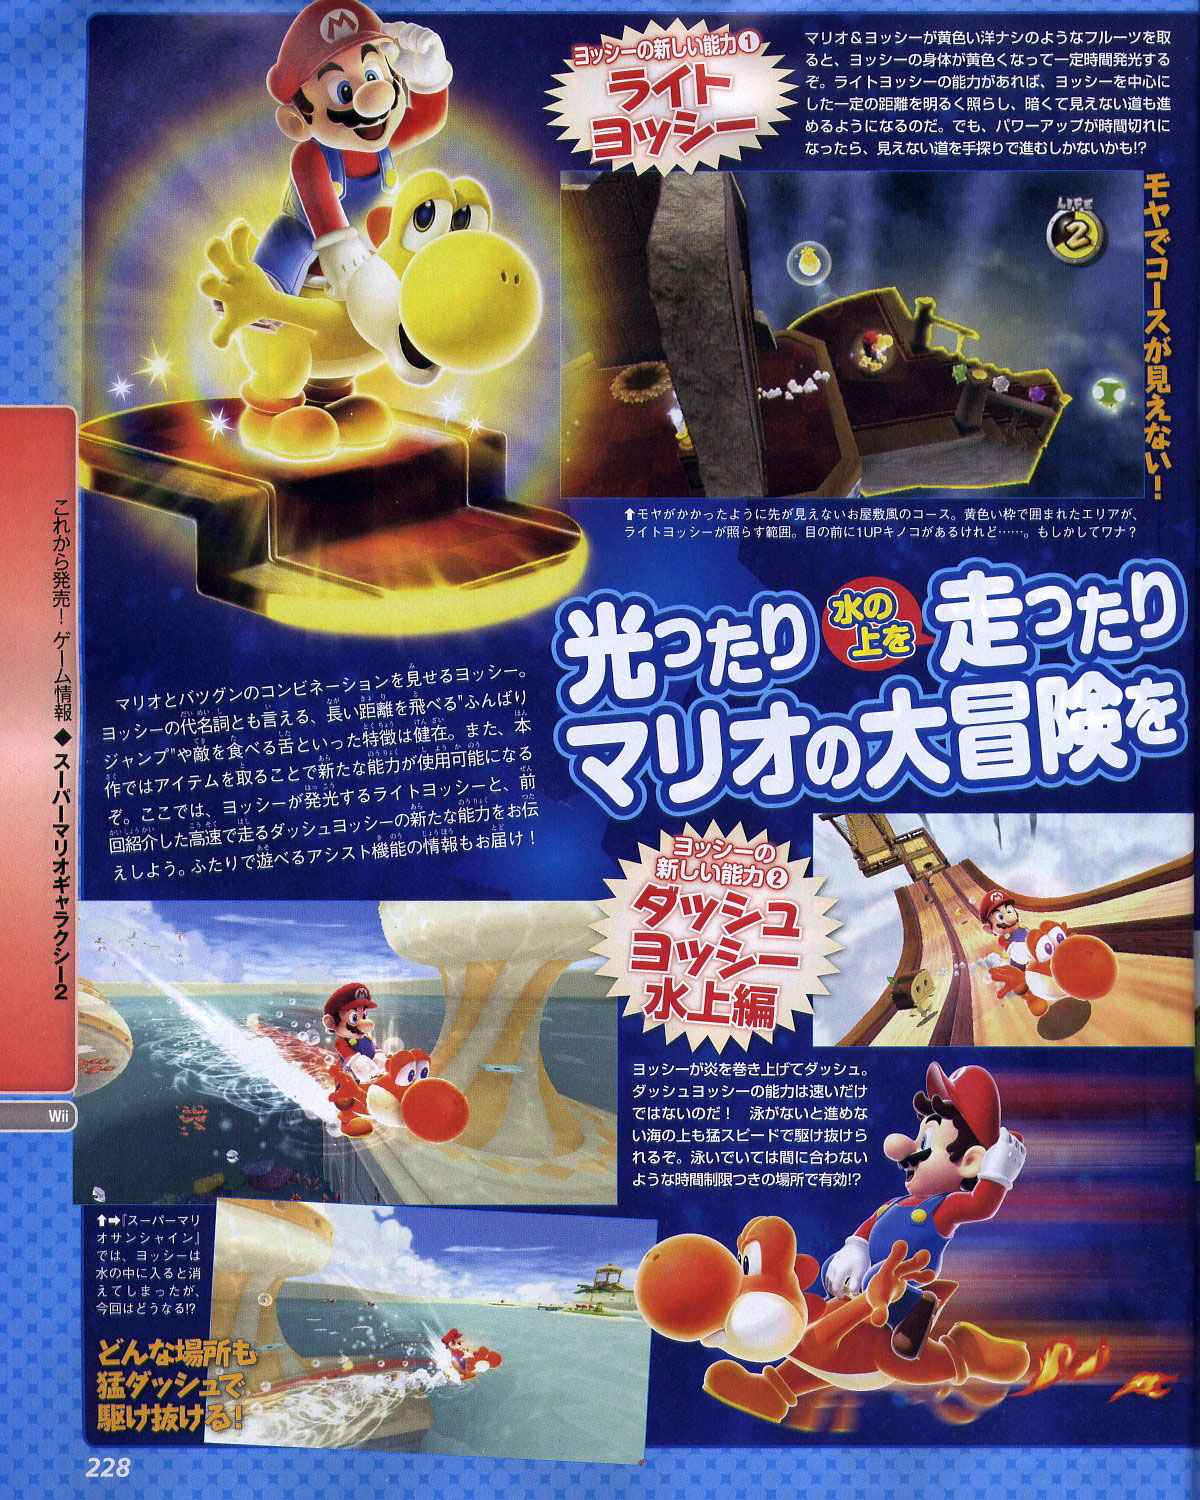 Super Mario Galaxy 2 Official Japanese Site Opens Super Mario Galaxy 2 Giant Bomb